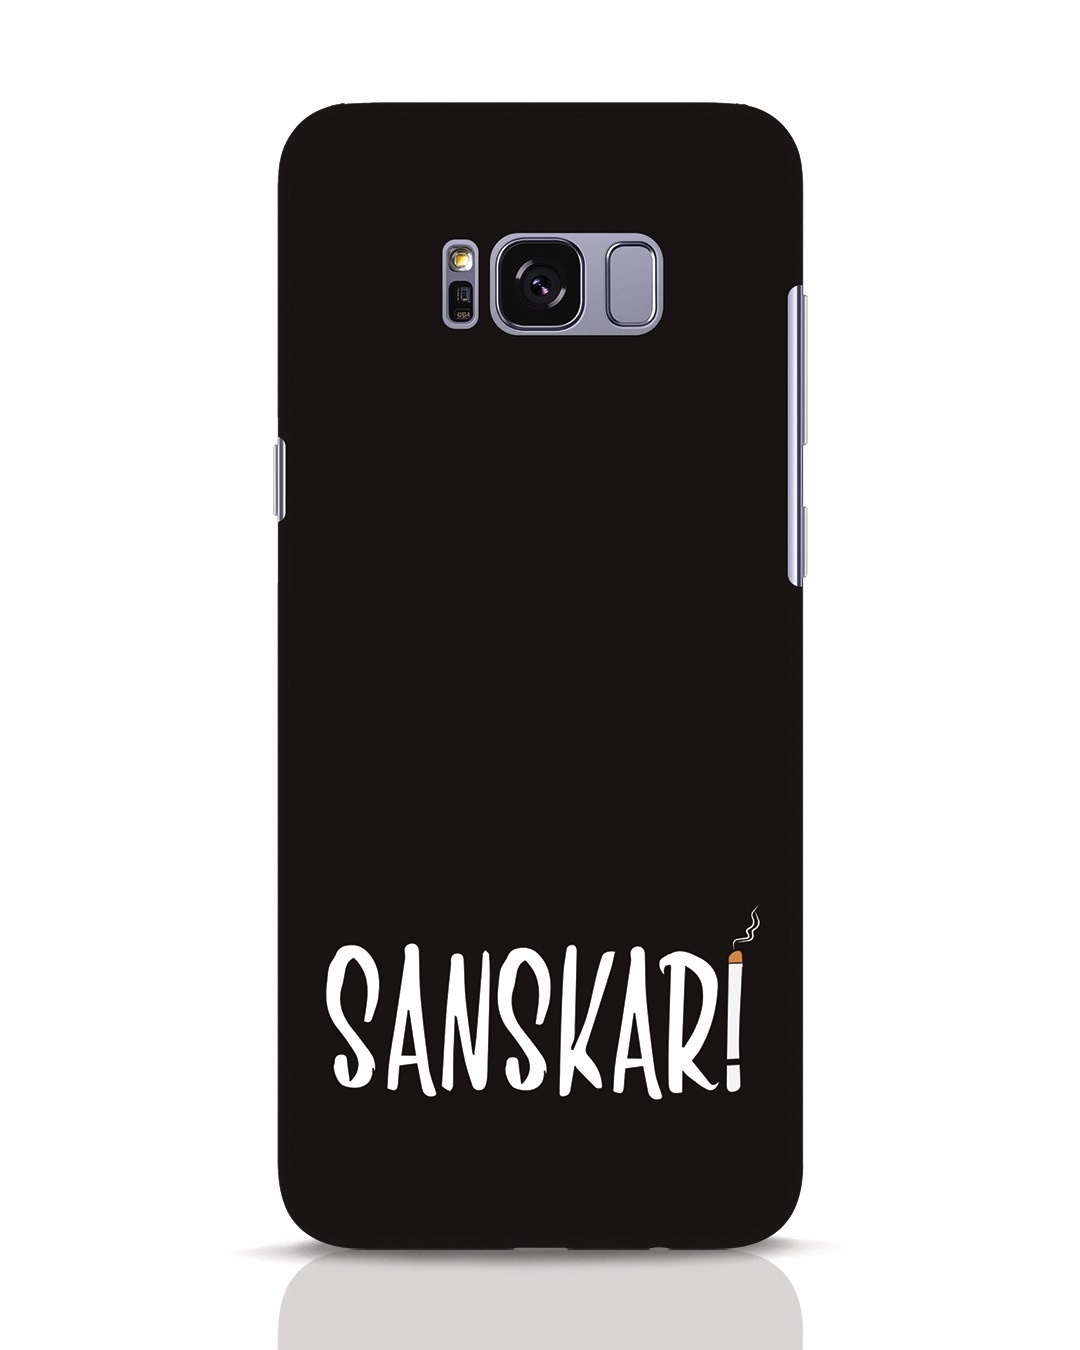 Sanskari Samsung Galaxy S8 Mobile Cover Samsung Galaxy S8 Mobile Covers Bewakoof.com